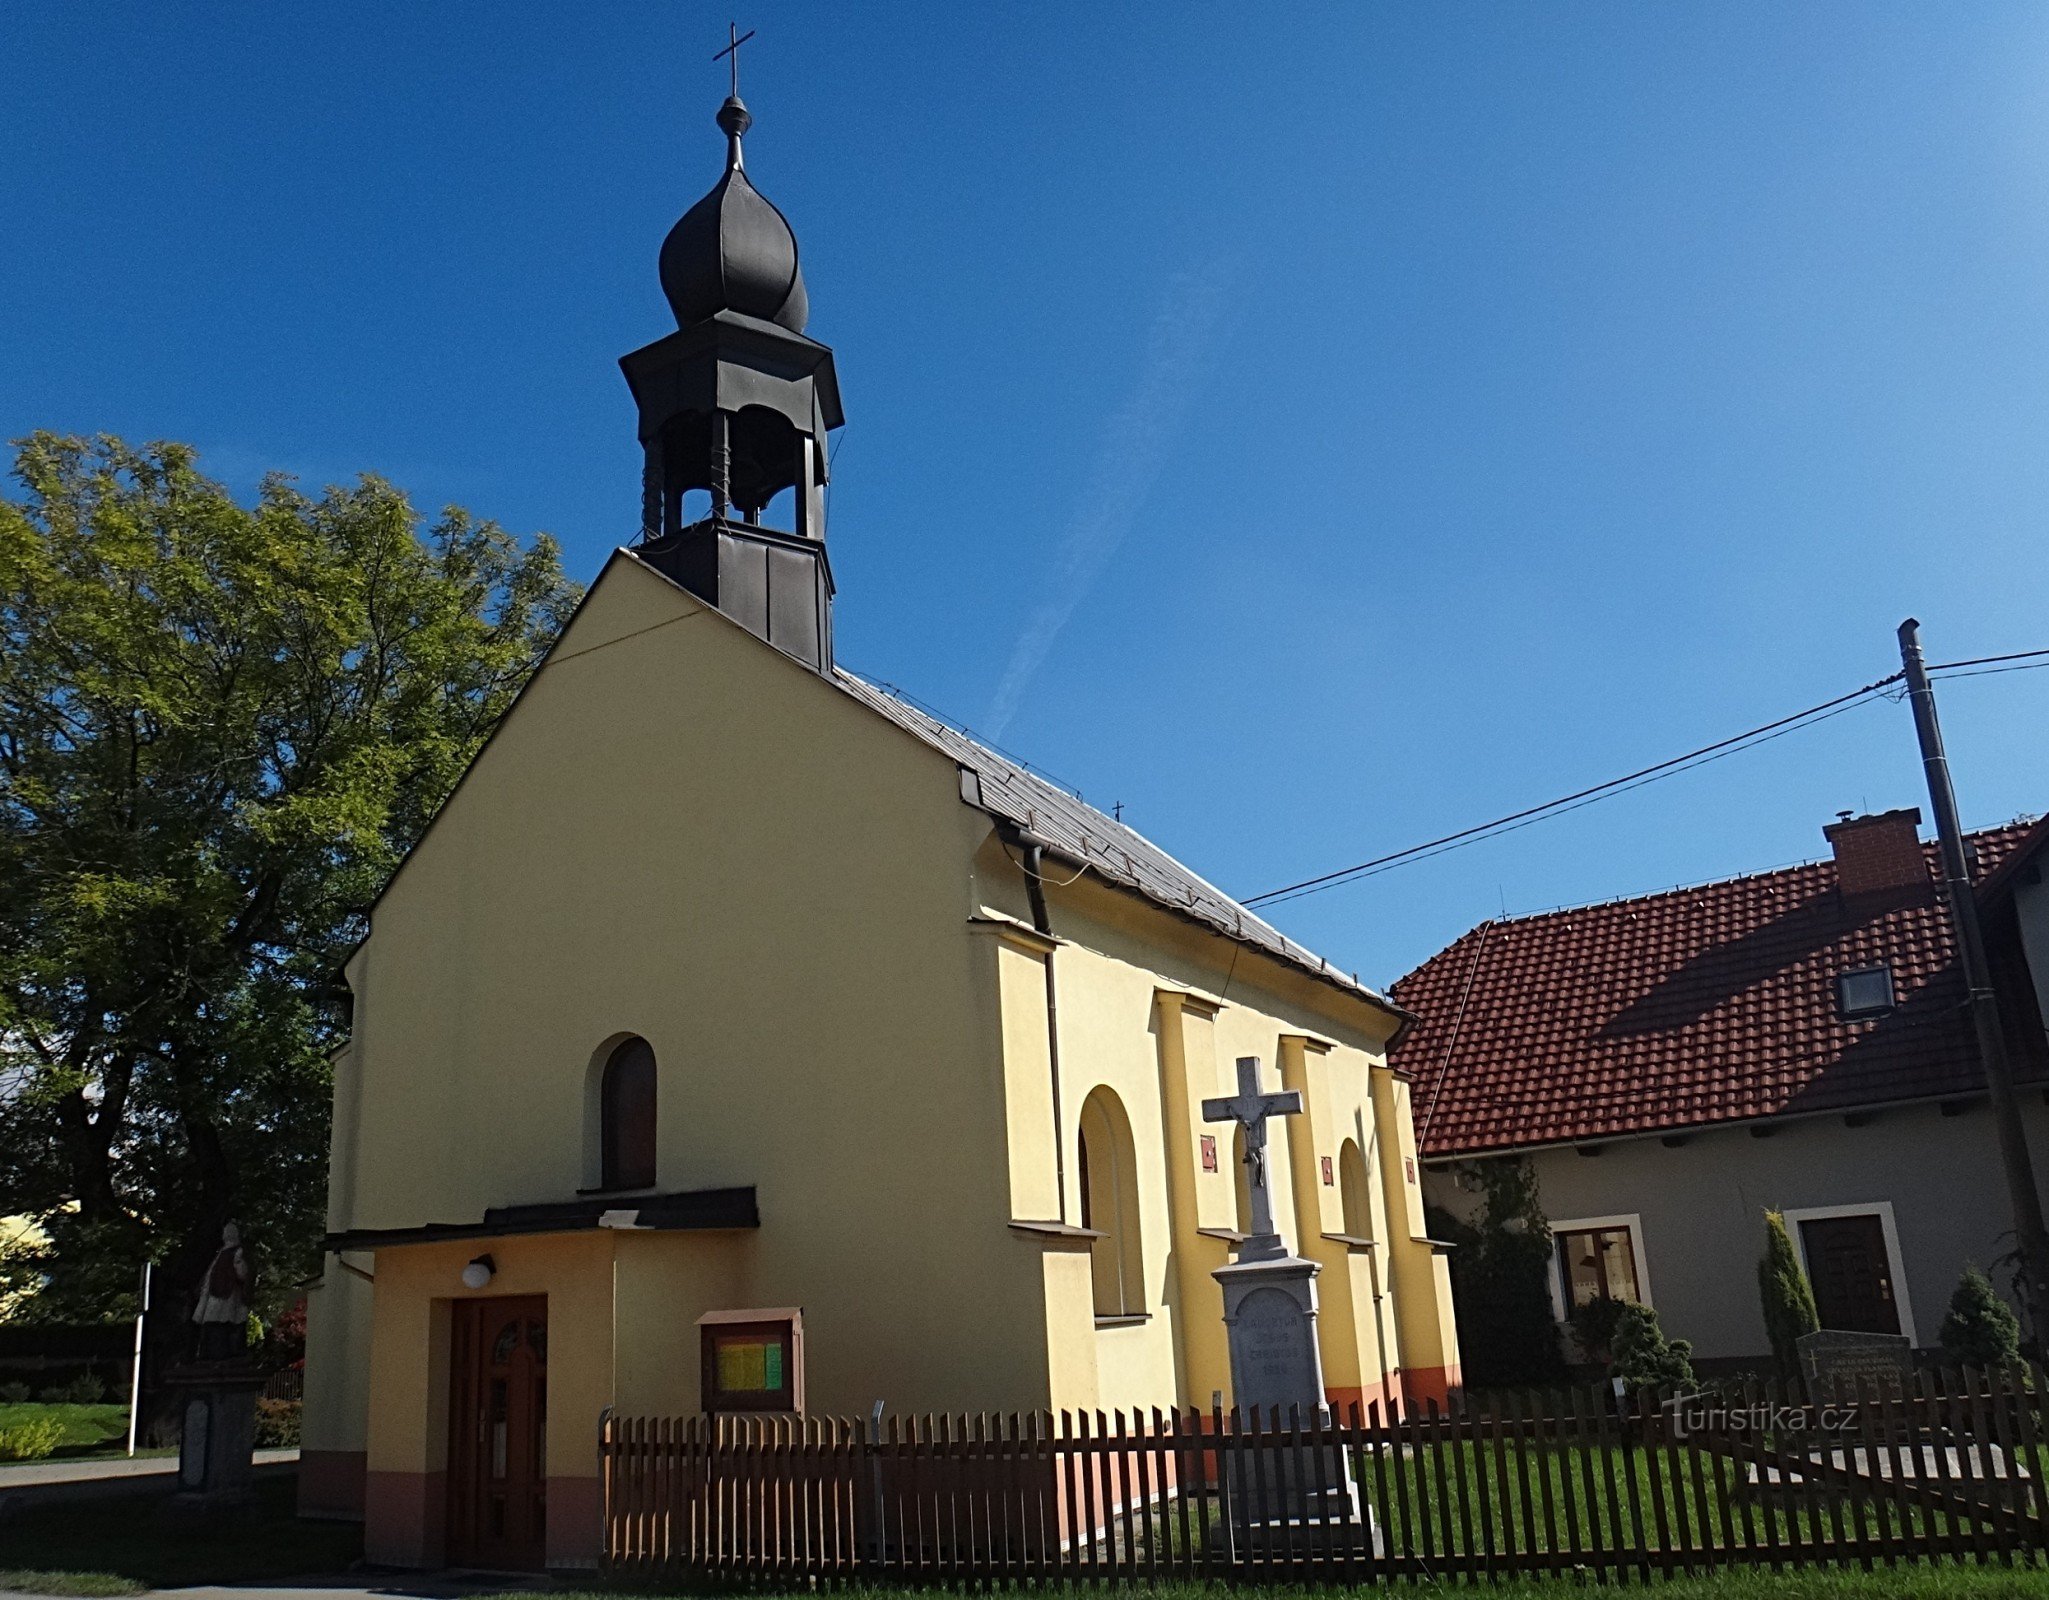 Věřňovice Capela Sf. Isidor